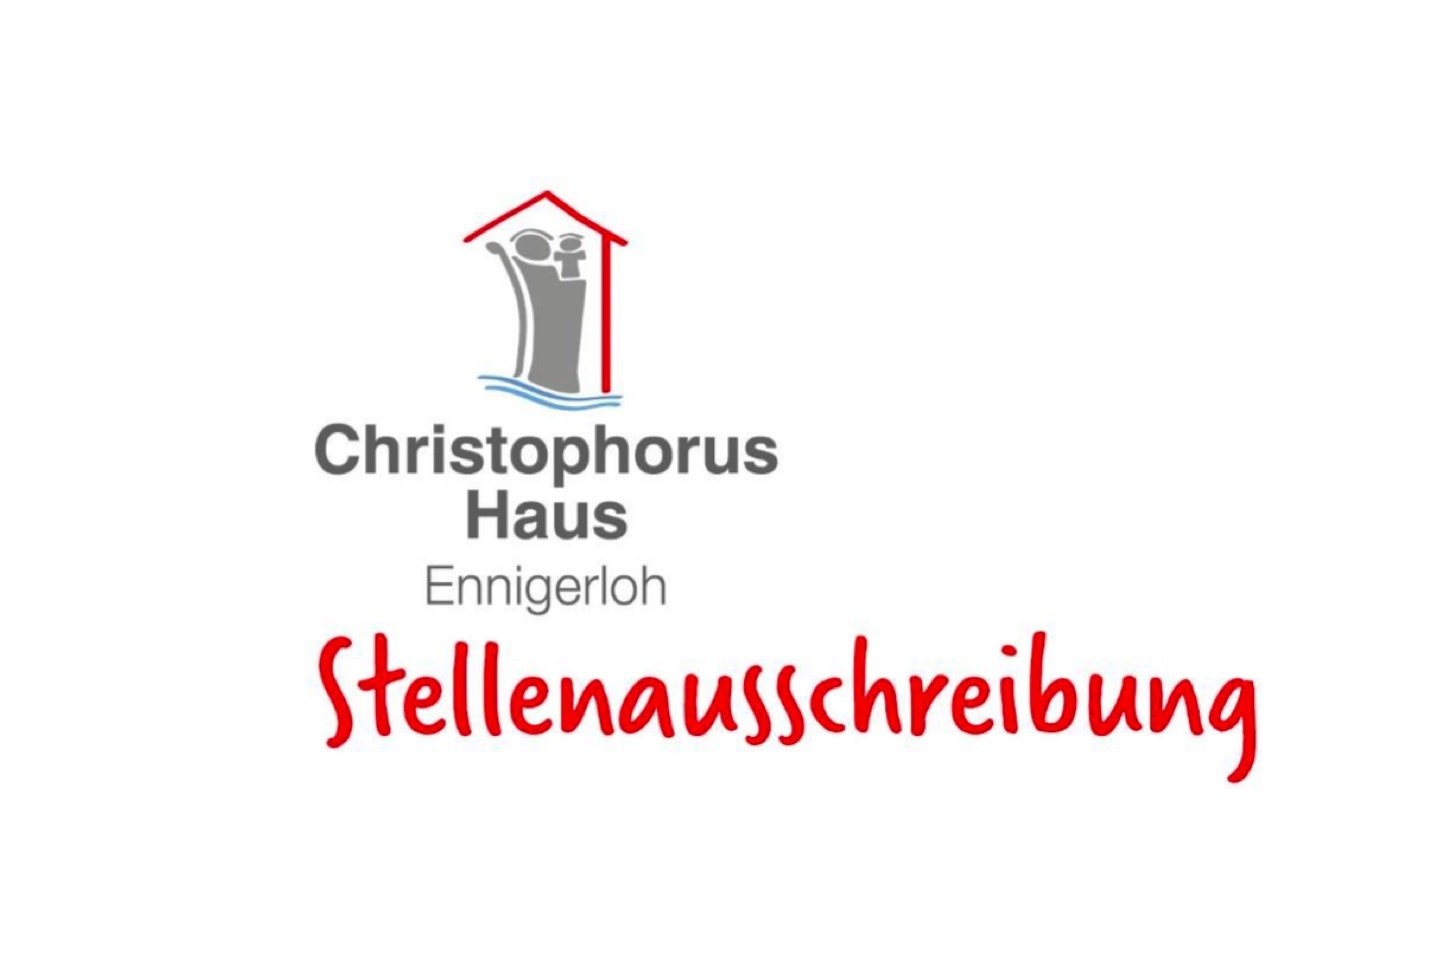 Christophorus Haus,Caritas,Stellenanzeige,Warendorf,